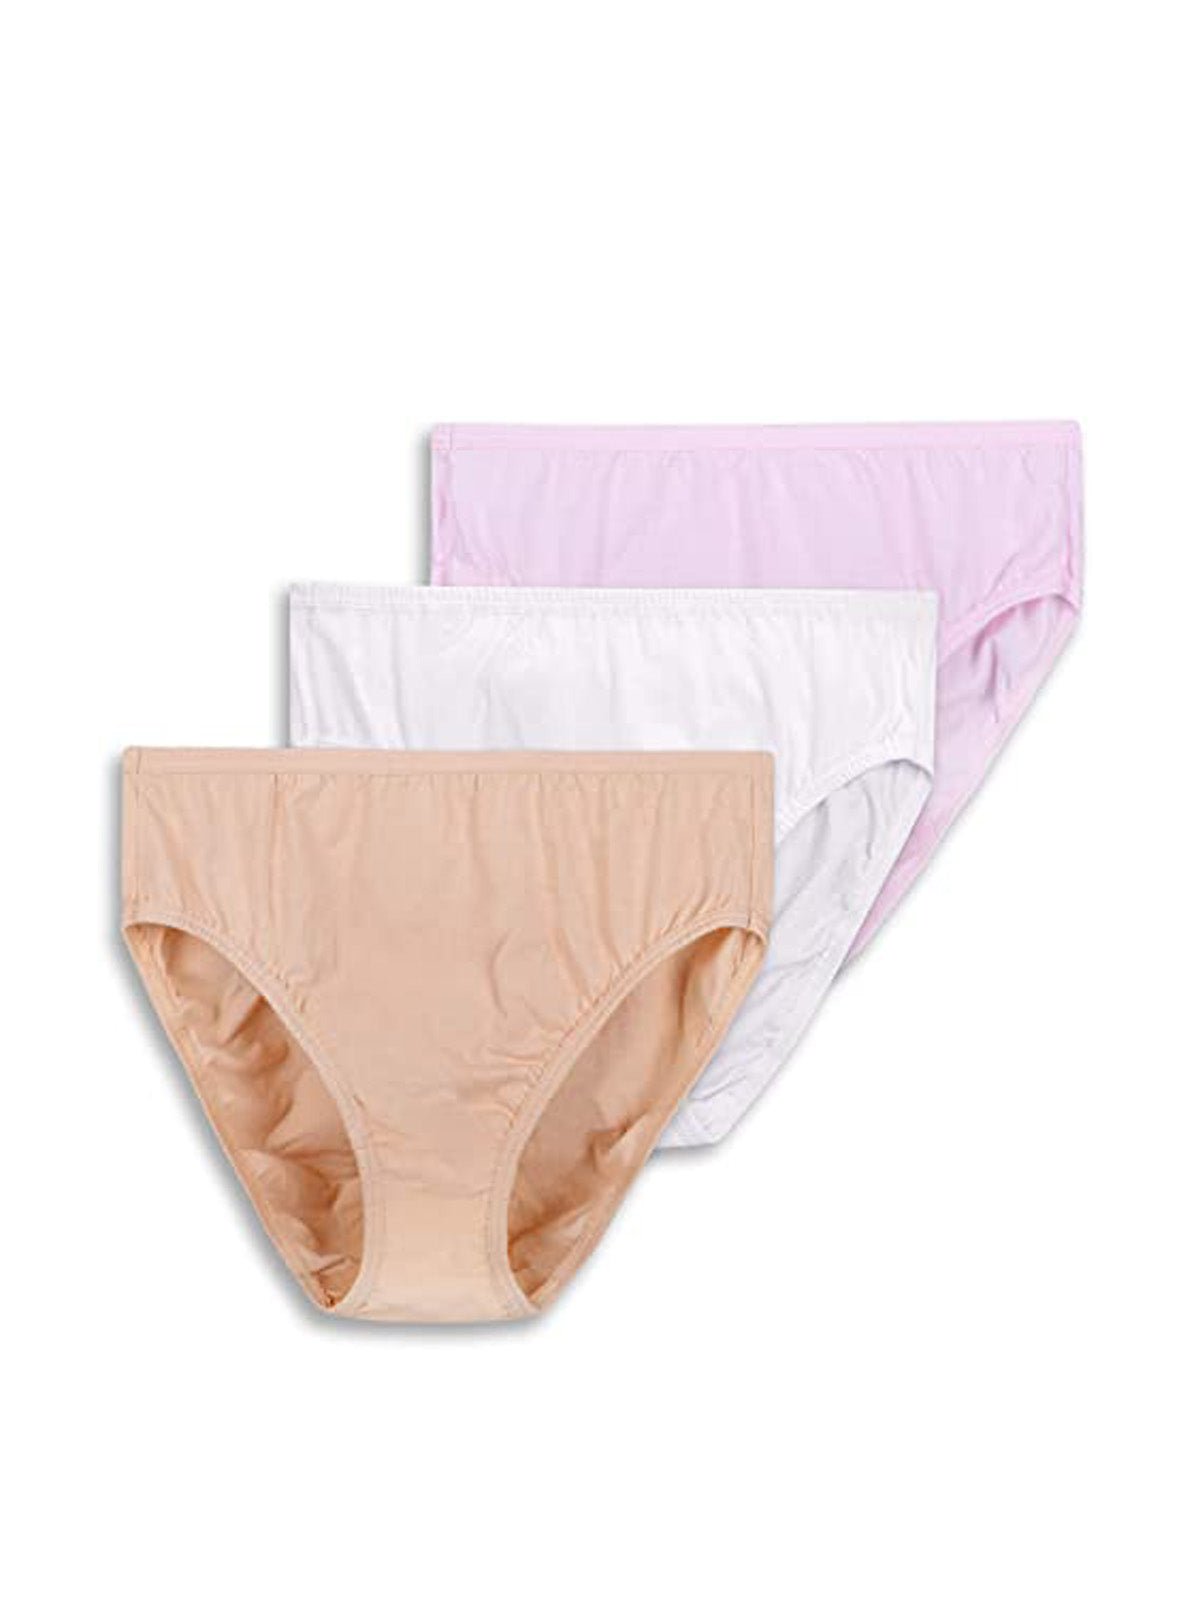 Fashiol Big Size Women's High Waist Cotton Underwear Soft Hipster Briefs  Zipper Pocket Panties Assorted Colour Pack of 2 Free Size (32 fit Till 38